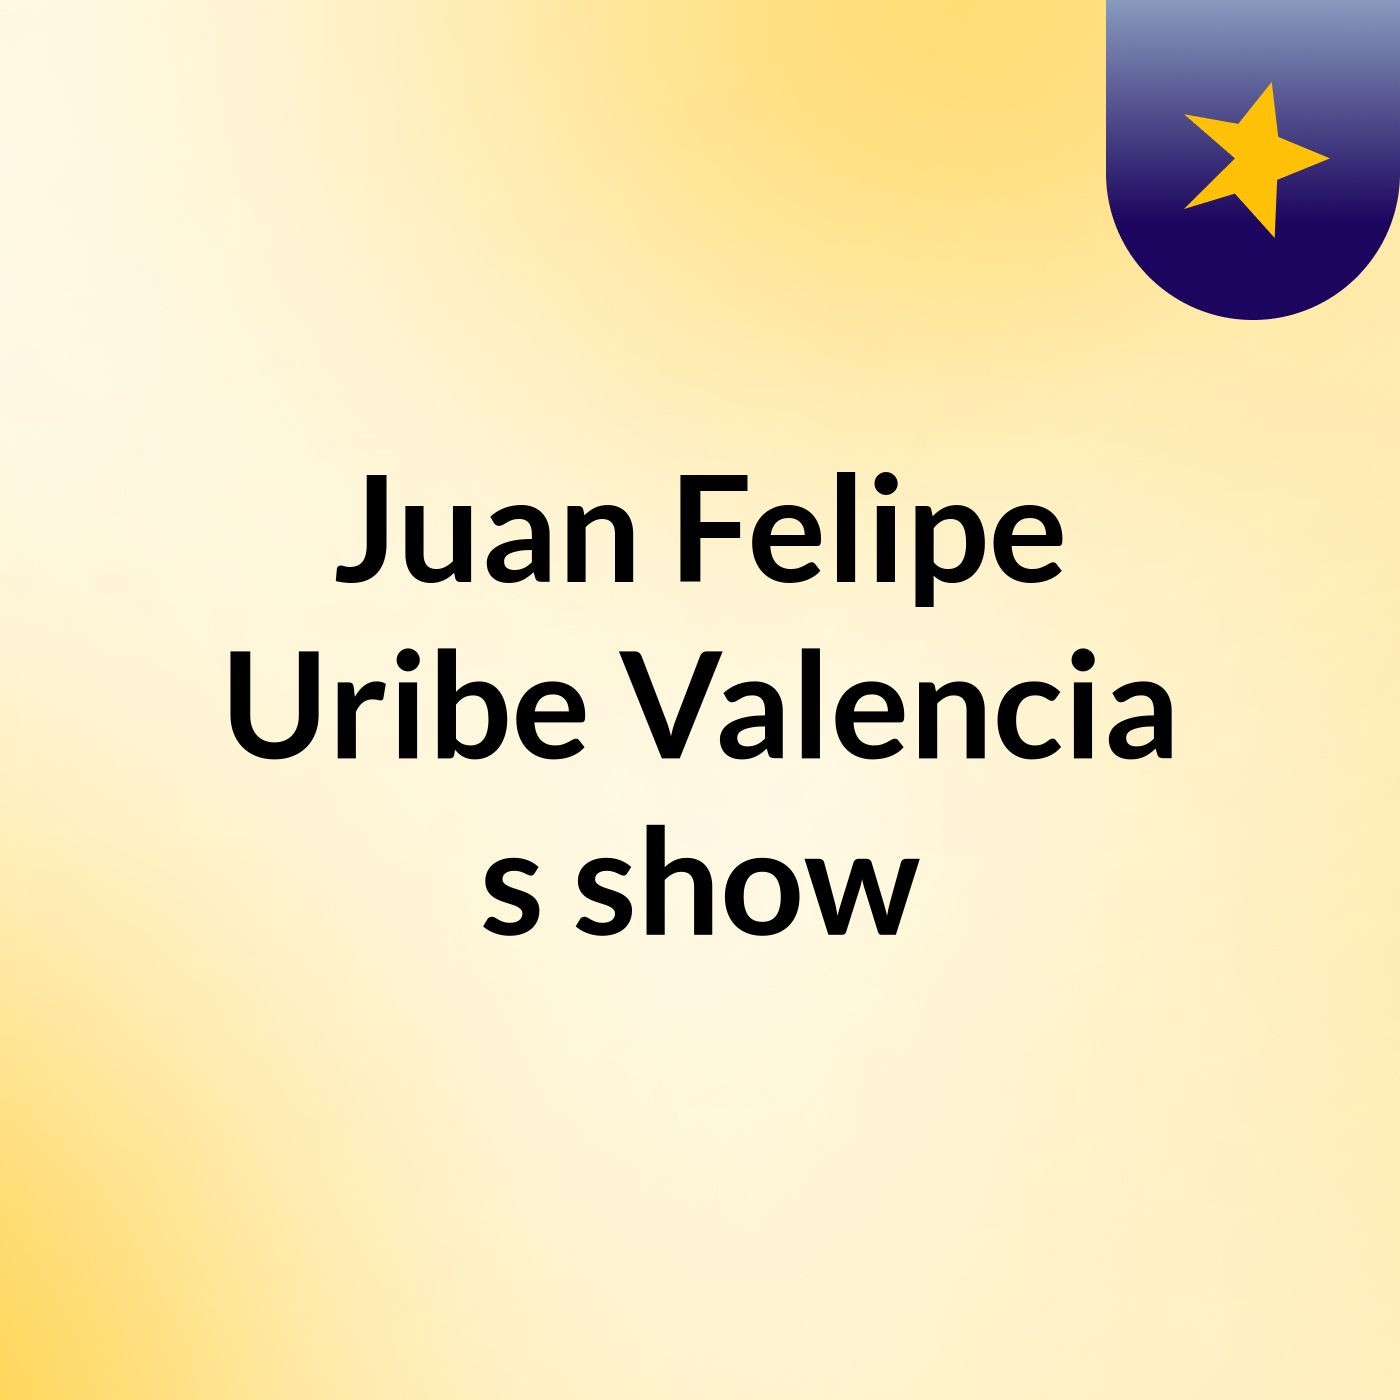 Juan Felipe Uribe Valencia's show